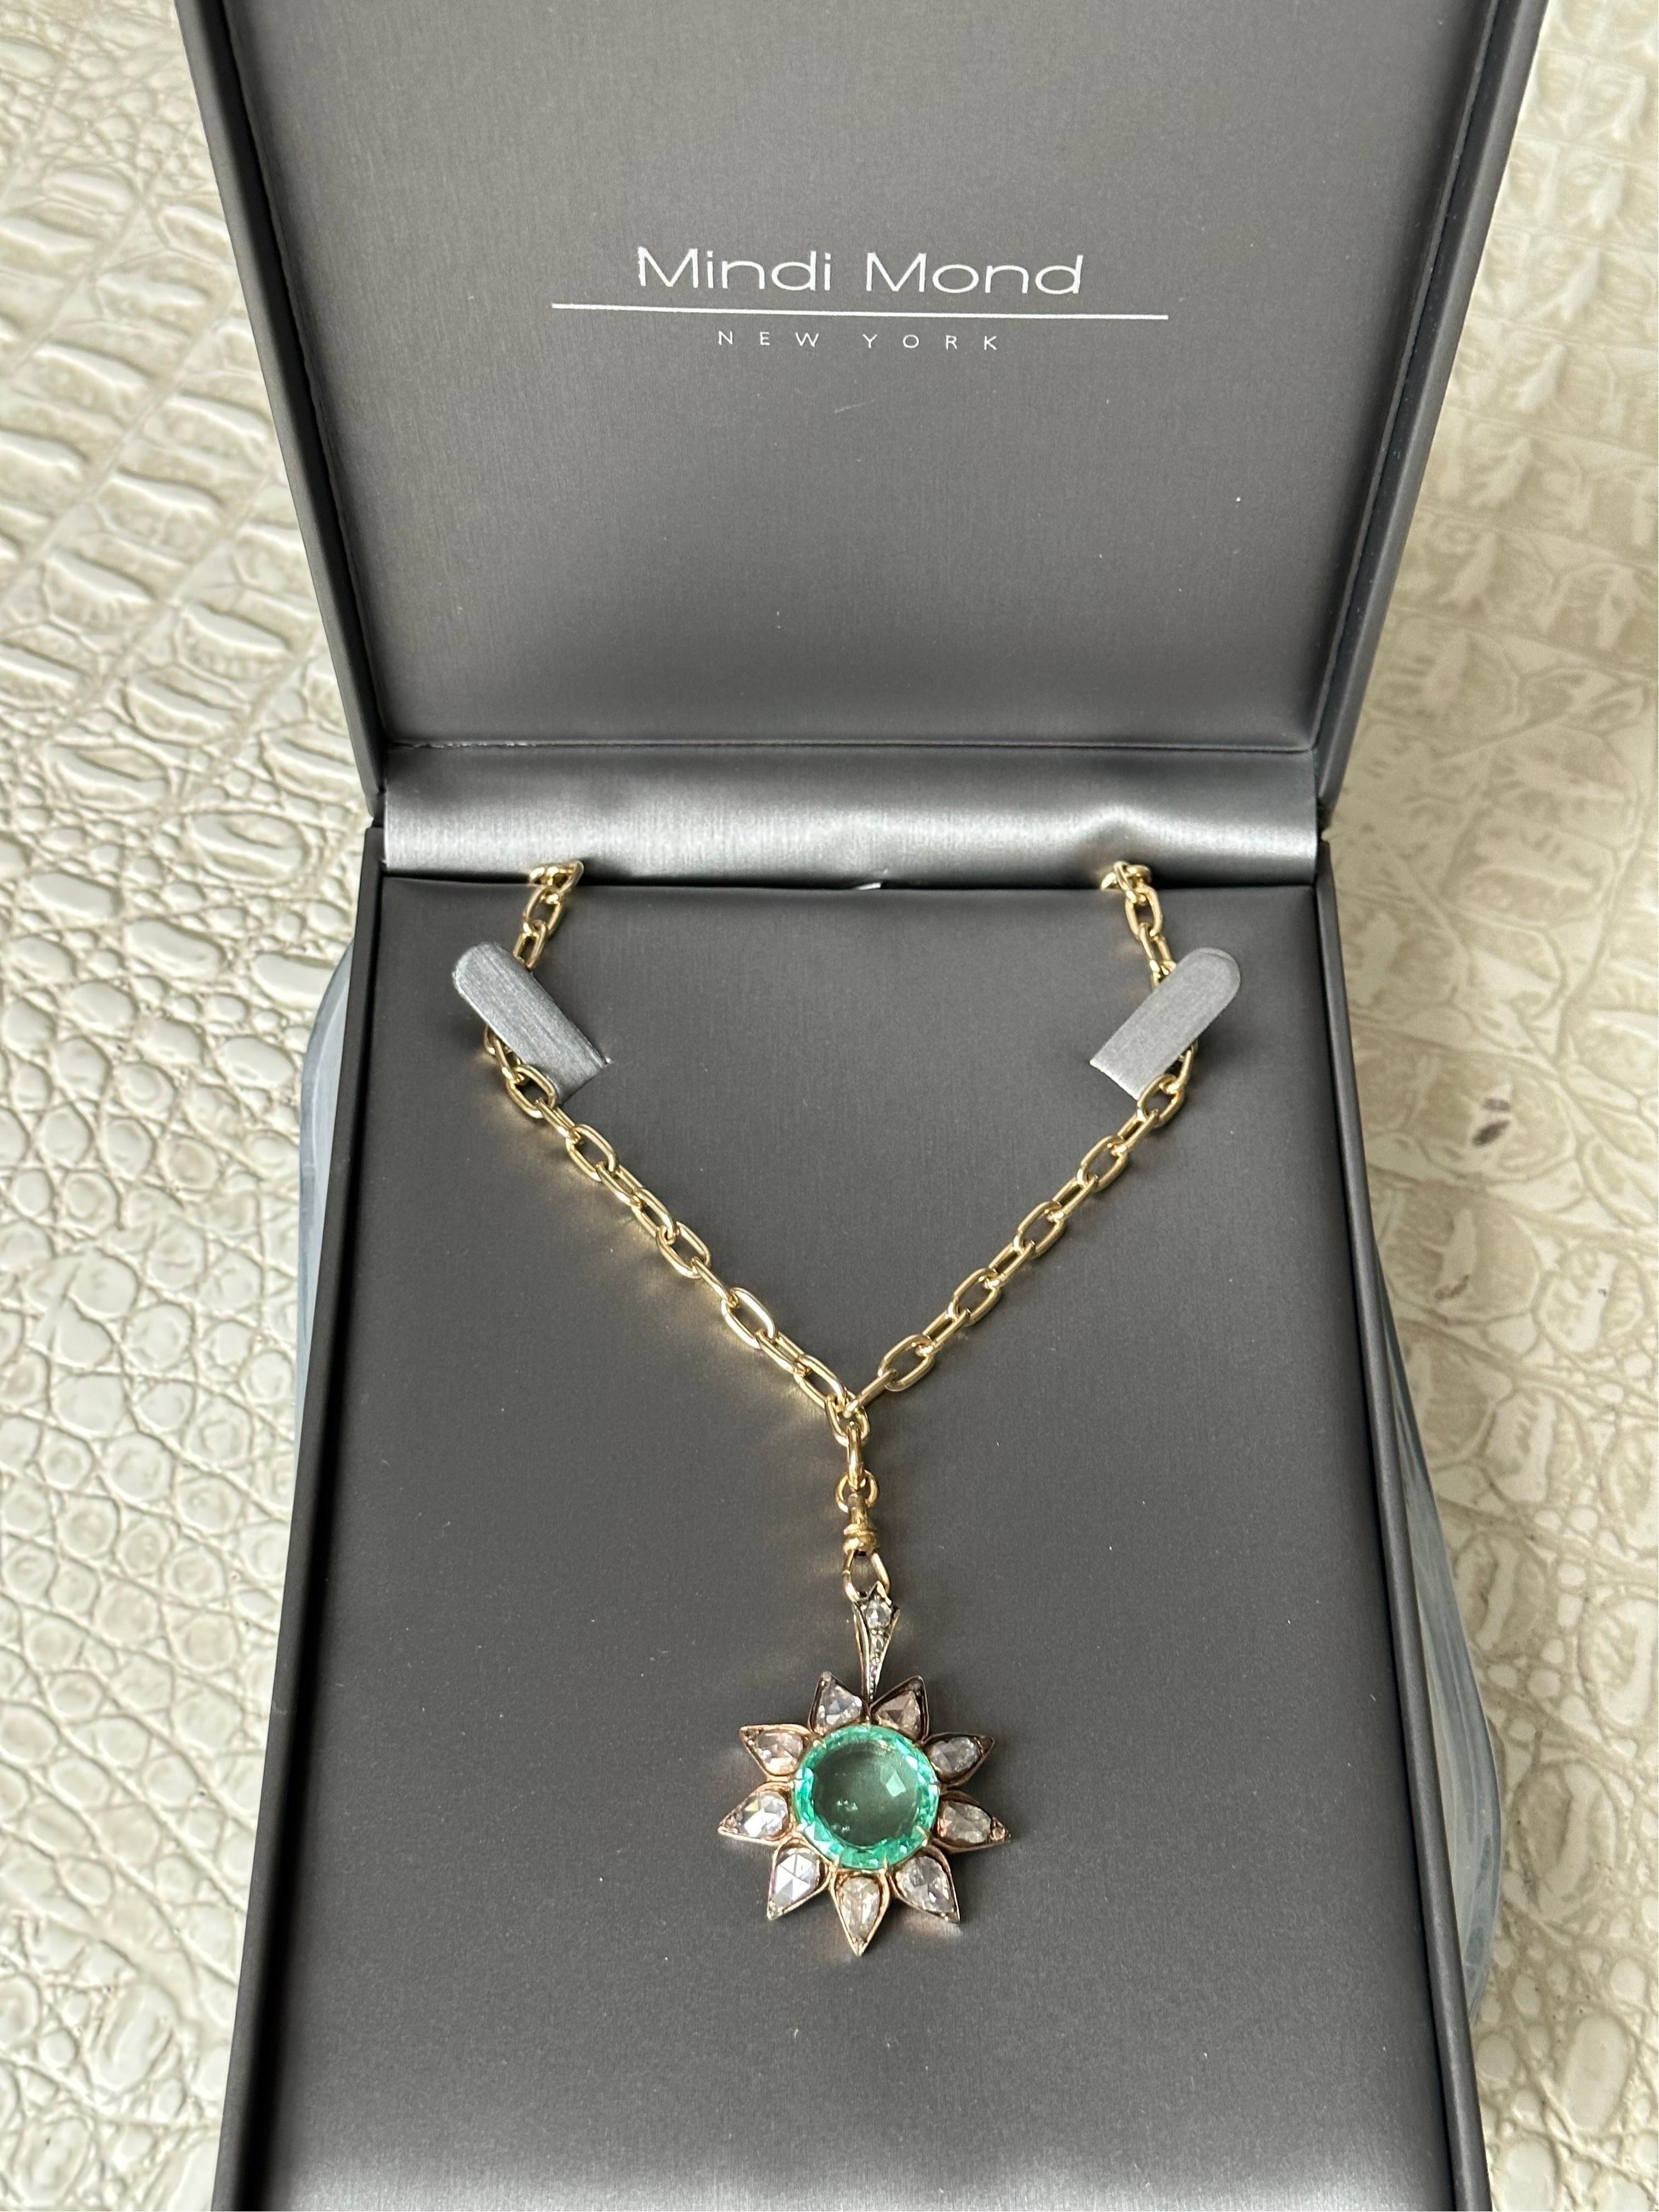 Women's or Men's Rose Cut Diamond Colombian Emerald Circa late 1700’s Gold Silver Pendant Brooch  For Sale